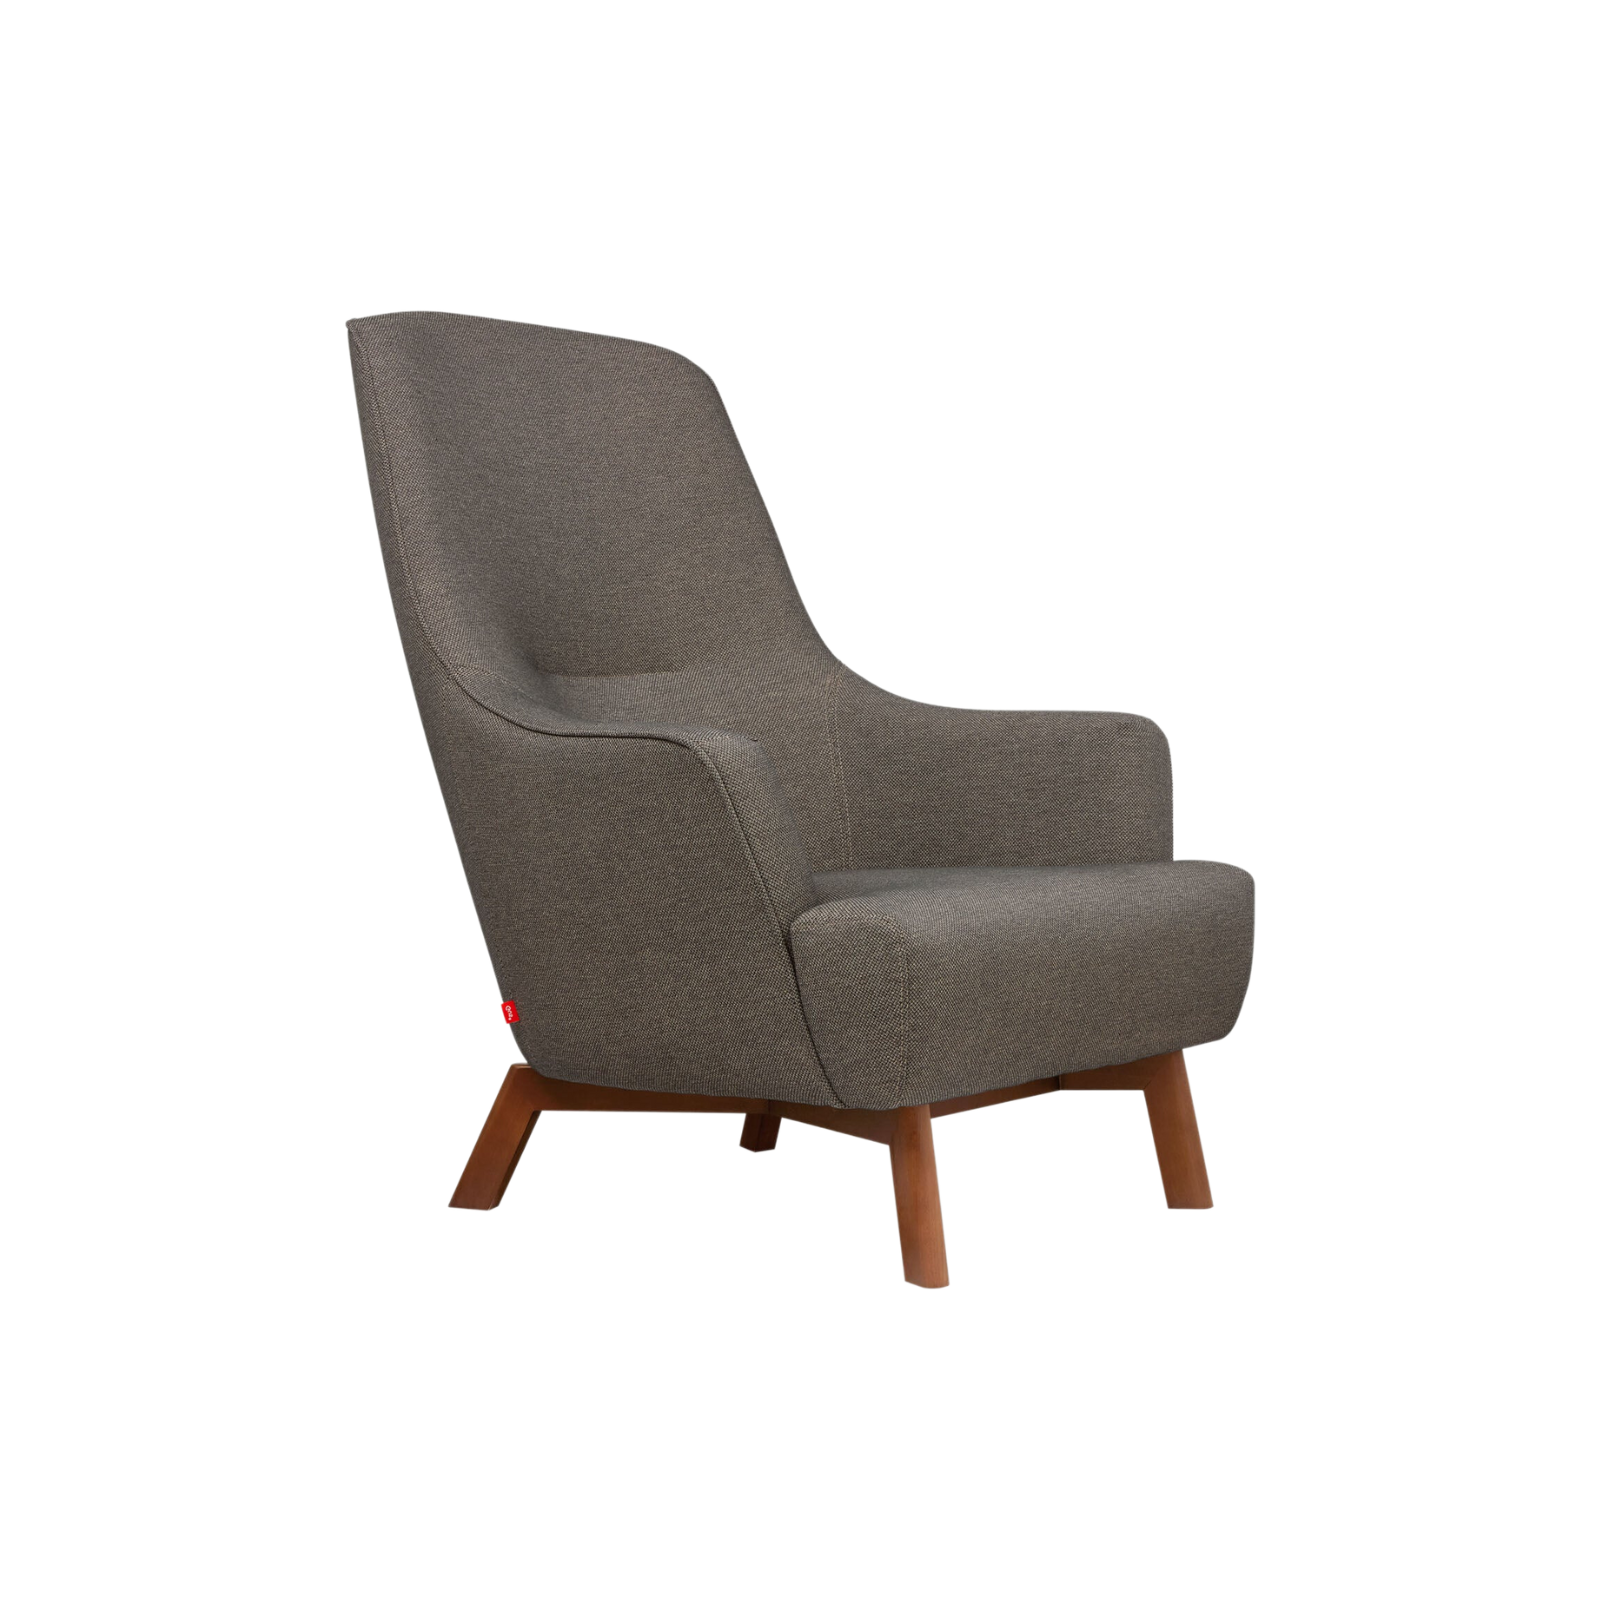 Gus* Hilary Chair - Rug & Weave